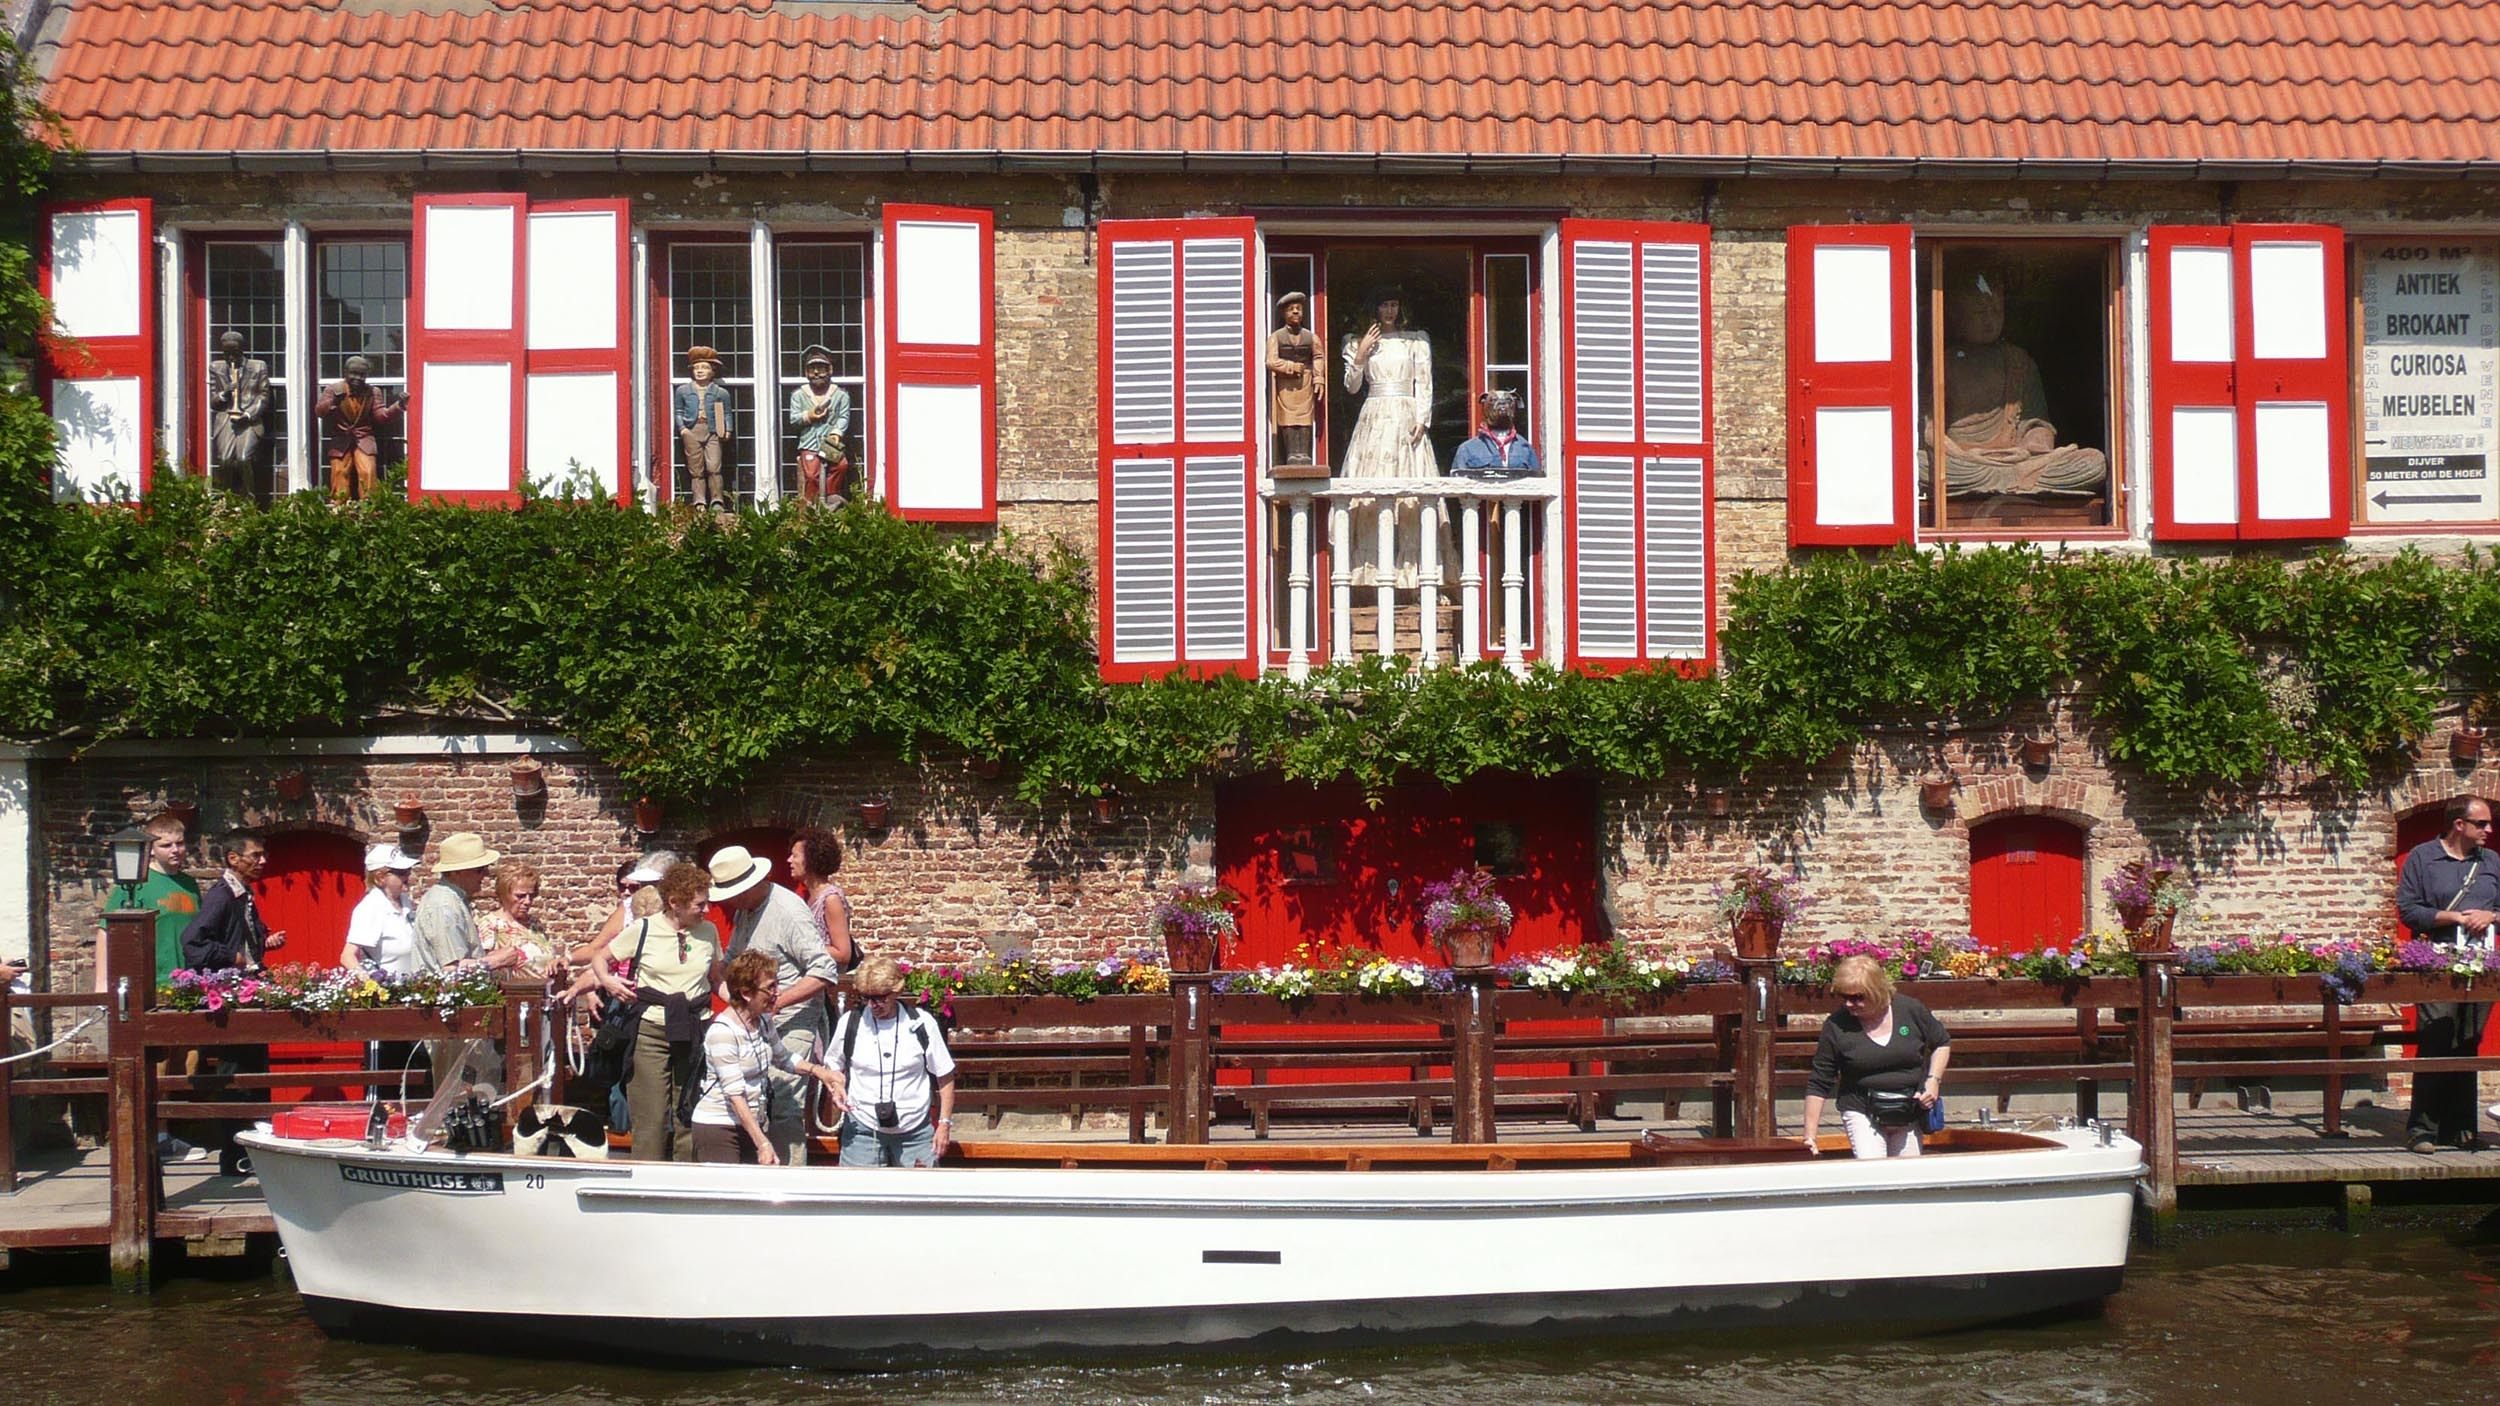 A canal boat in Bruges Beligum